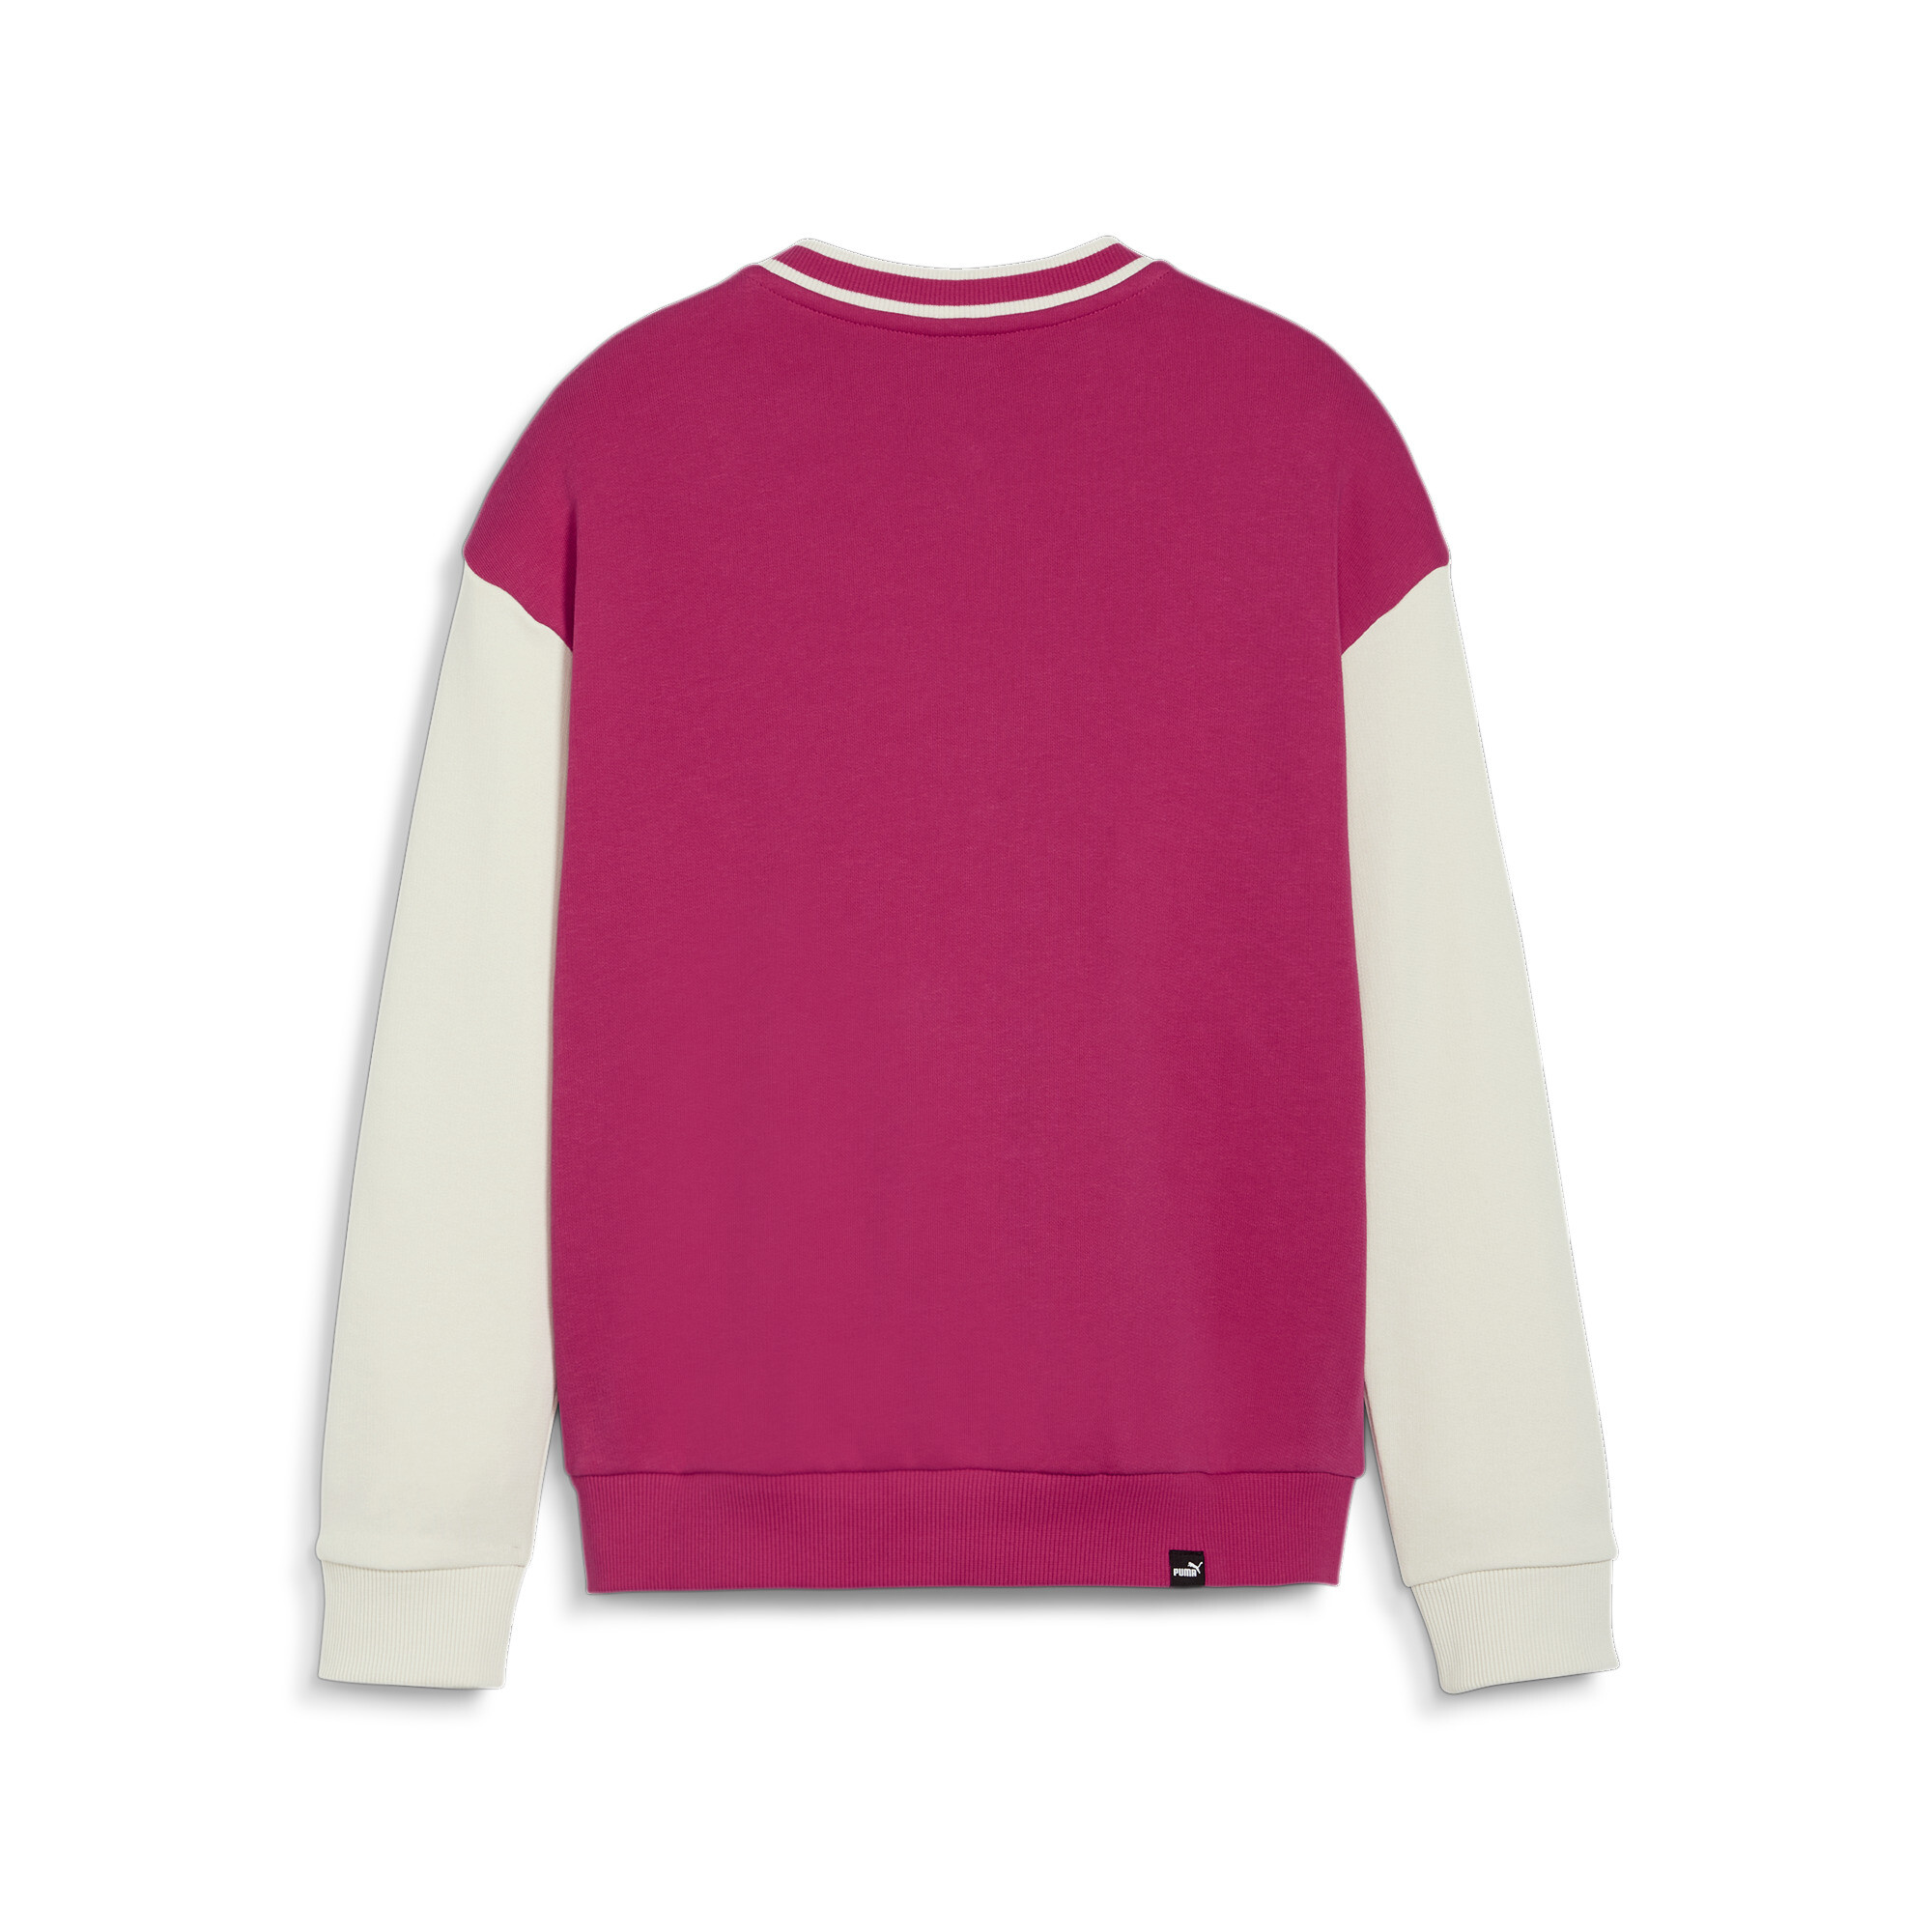 Women's Puma SQUAD Youth Jacket, Pink, Size 7-8Y, Clothing